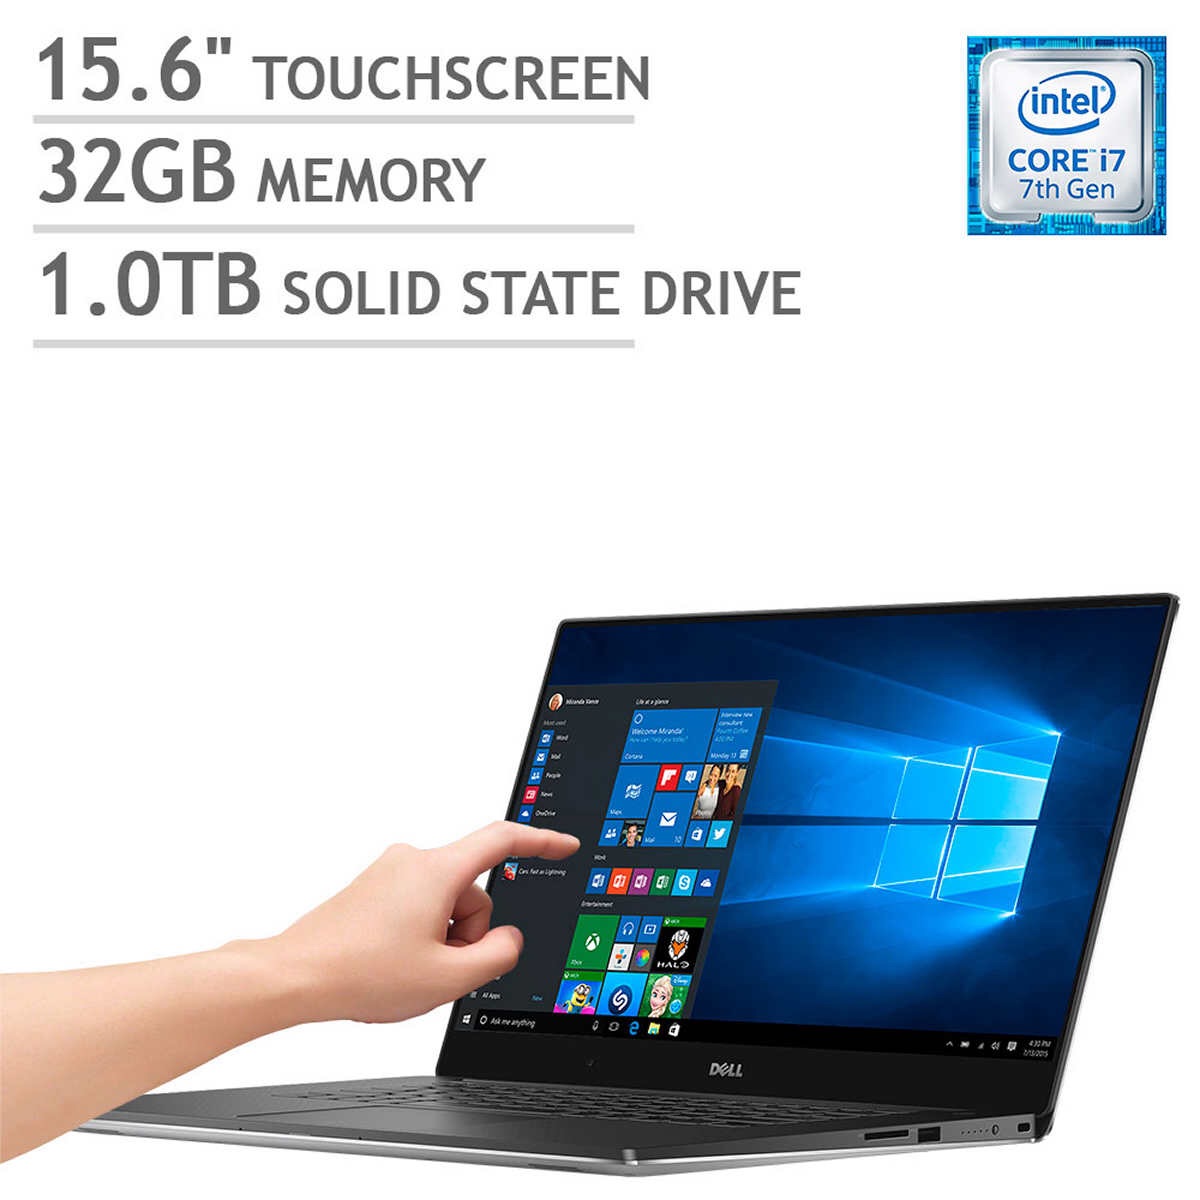 Dell XPS 15 Touchscreen 笔电 - Intel Core i7 - 4K Ultra HD - 4GB NVIDIA Graphics